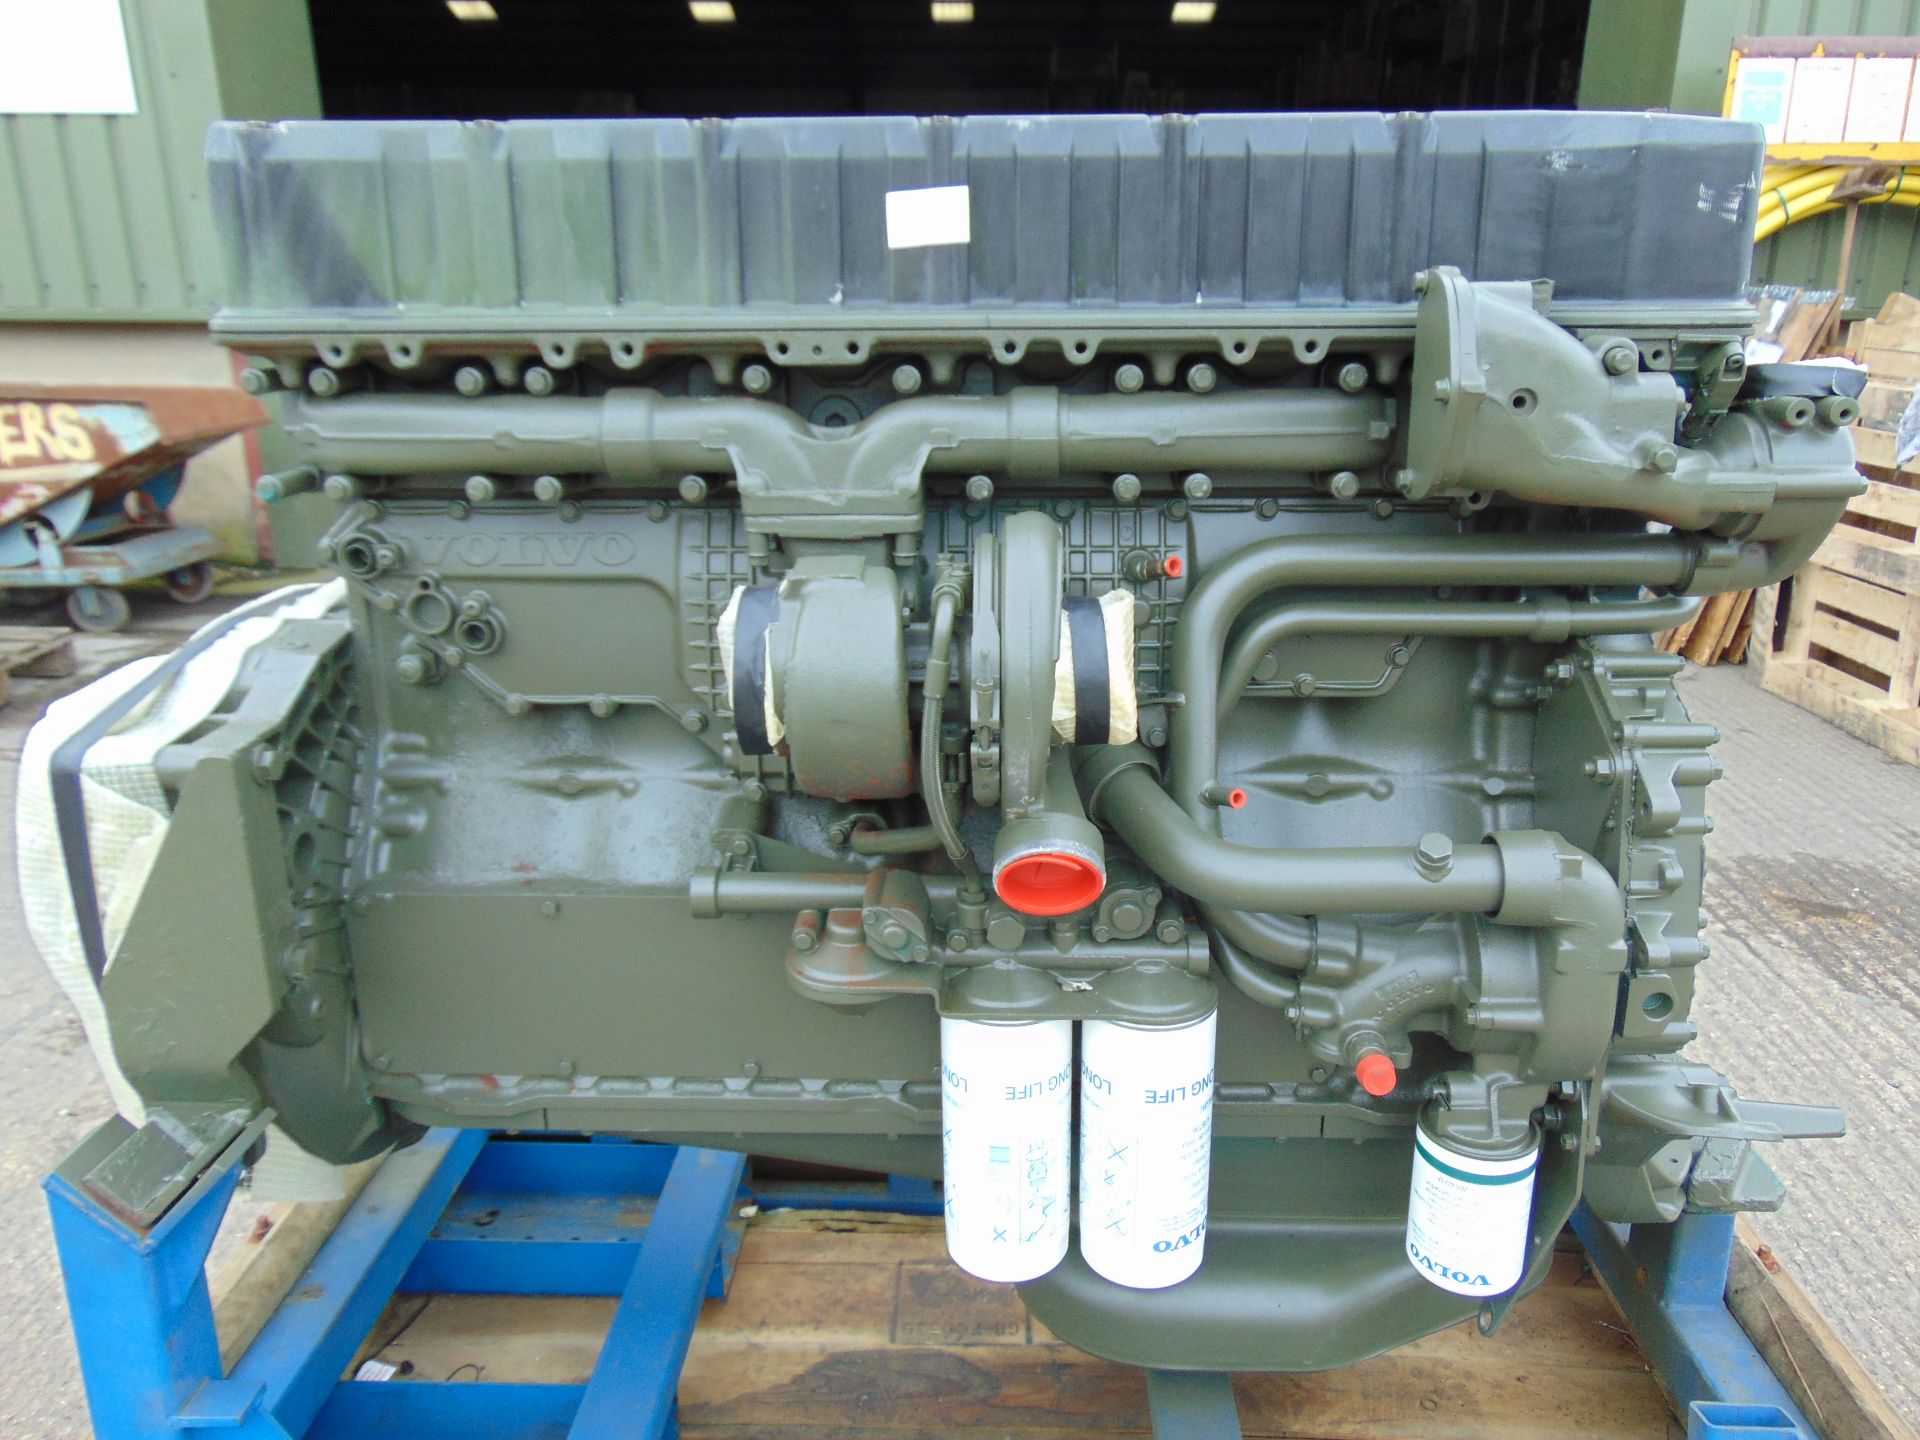 Volvo D12A 340 EC96 12.1 L Turbo Diesel Engine